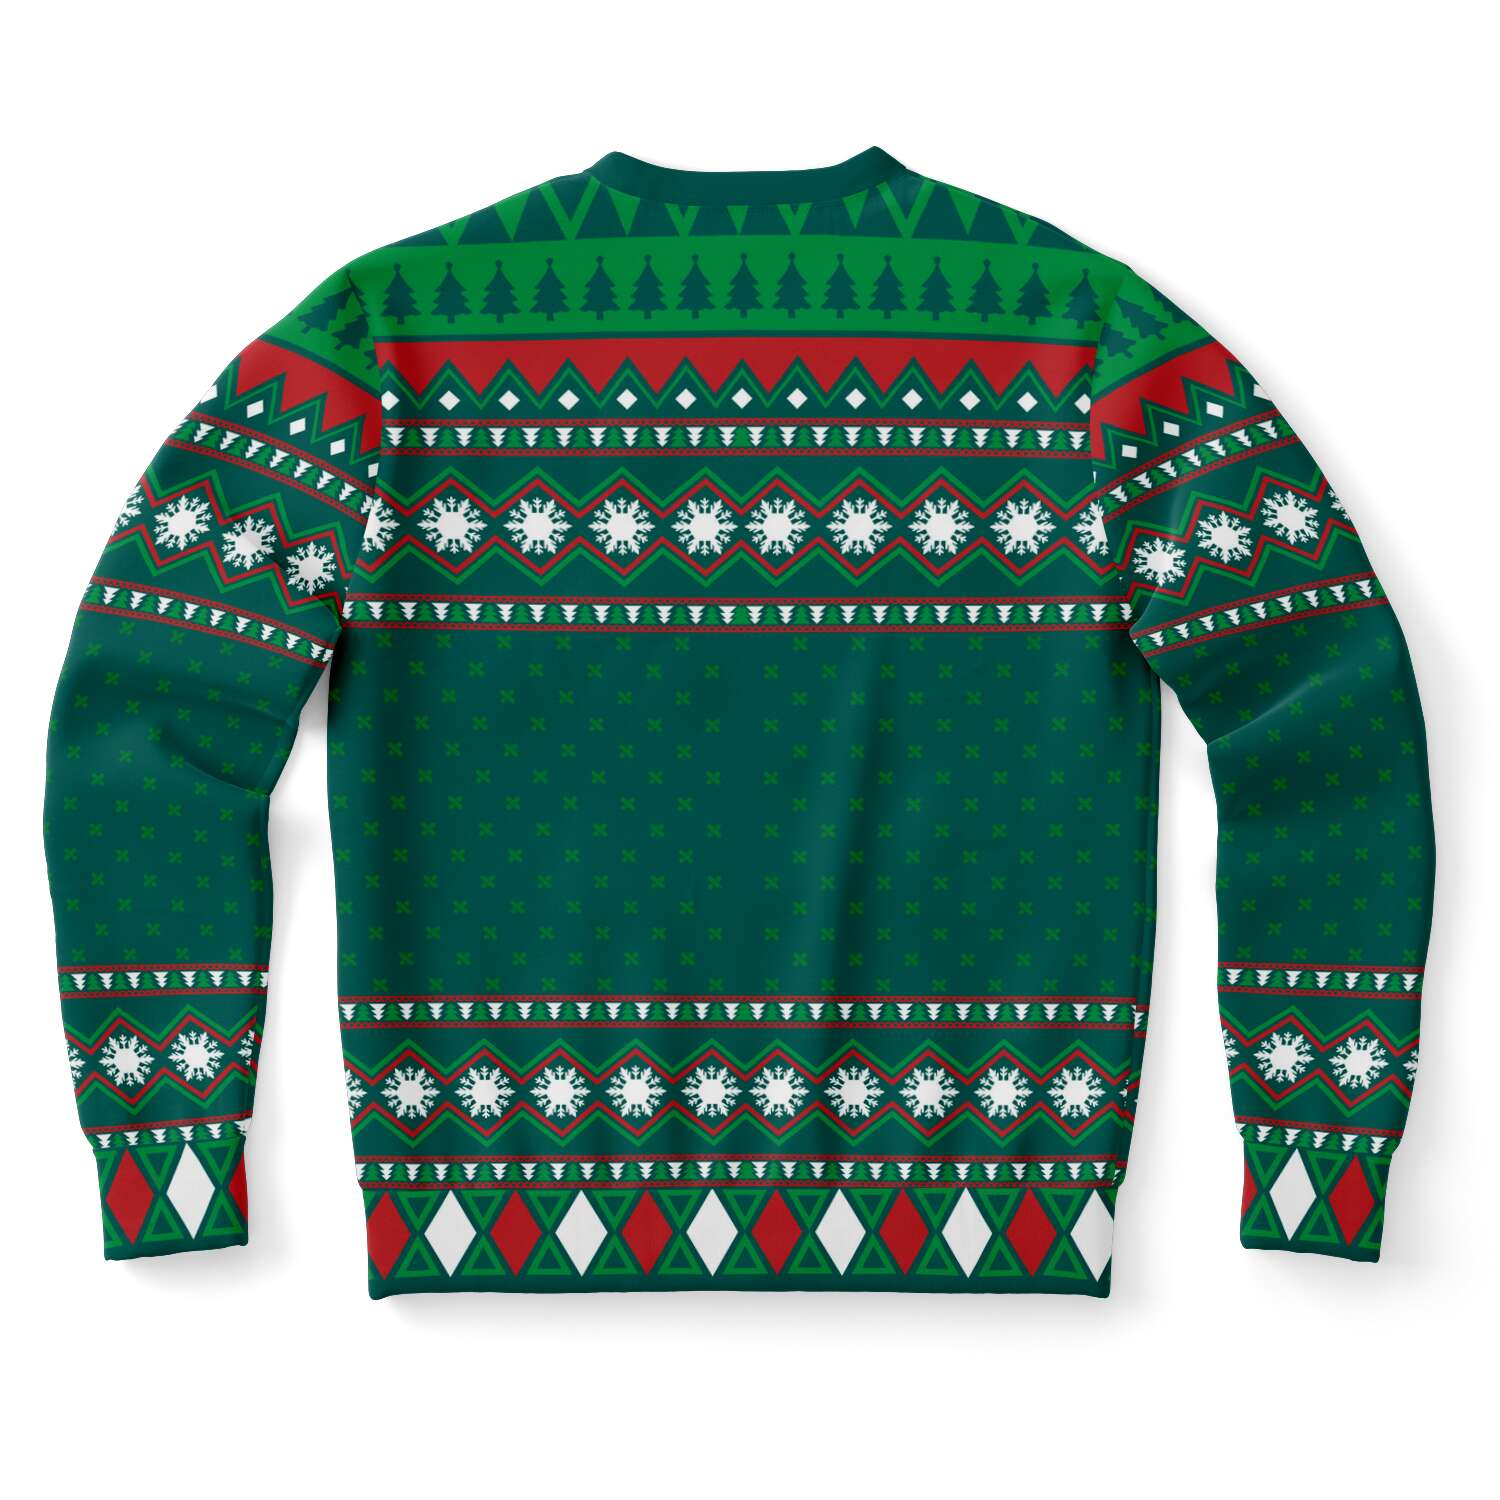 SUBLIMINATOR Bowling Ugly Christmas Sweaters Sweatshirt